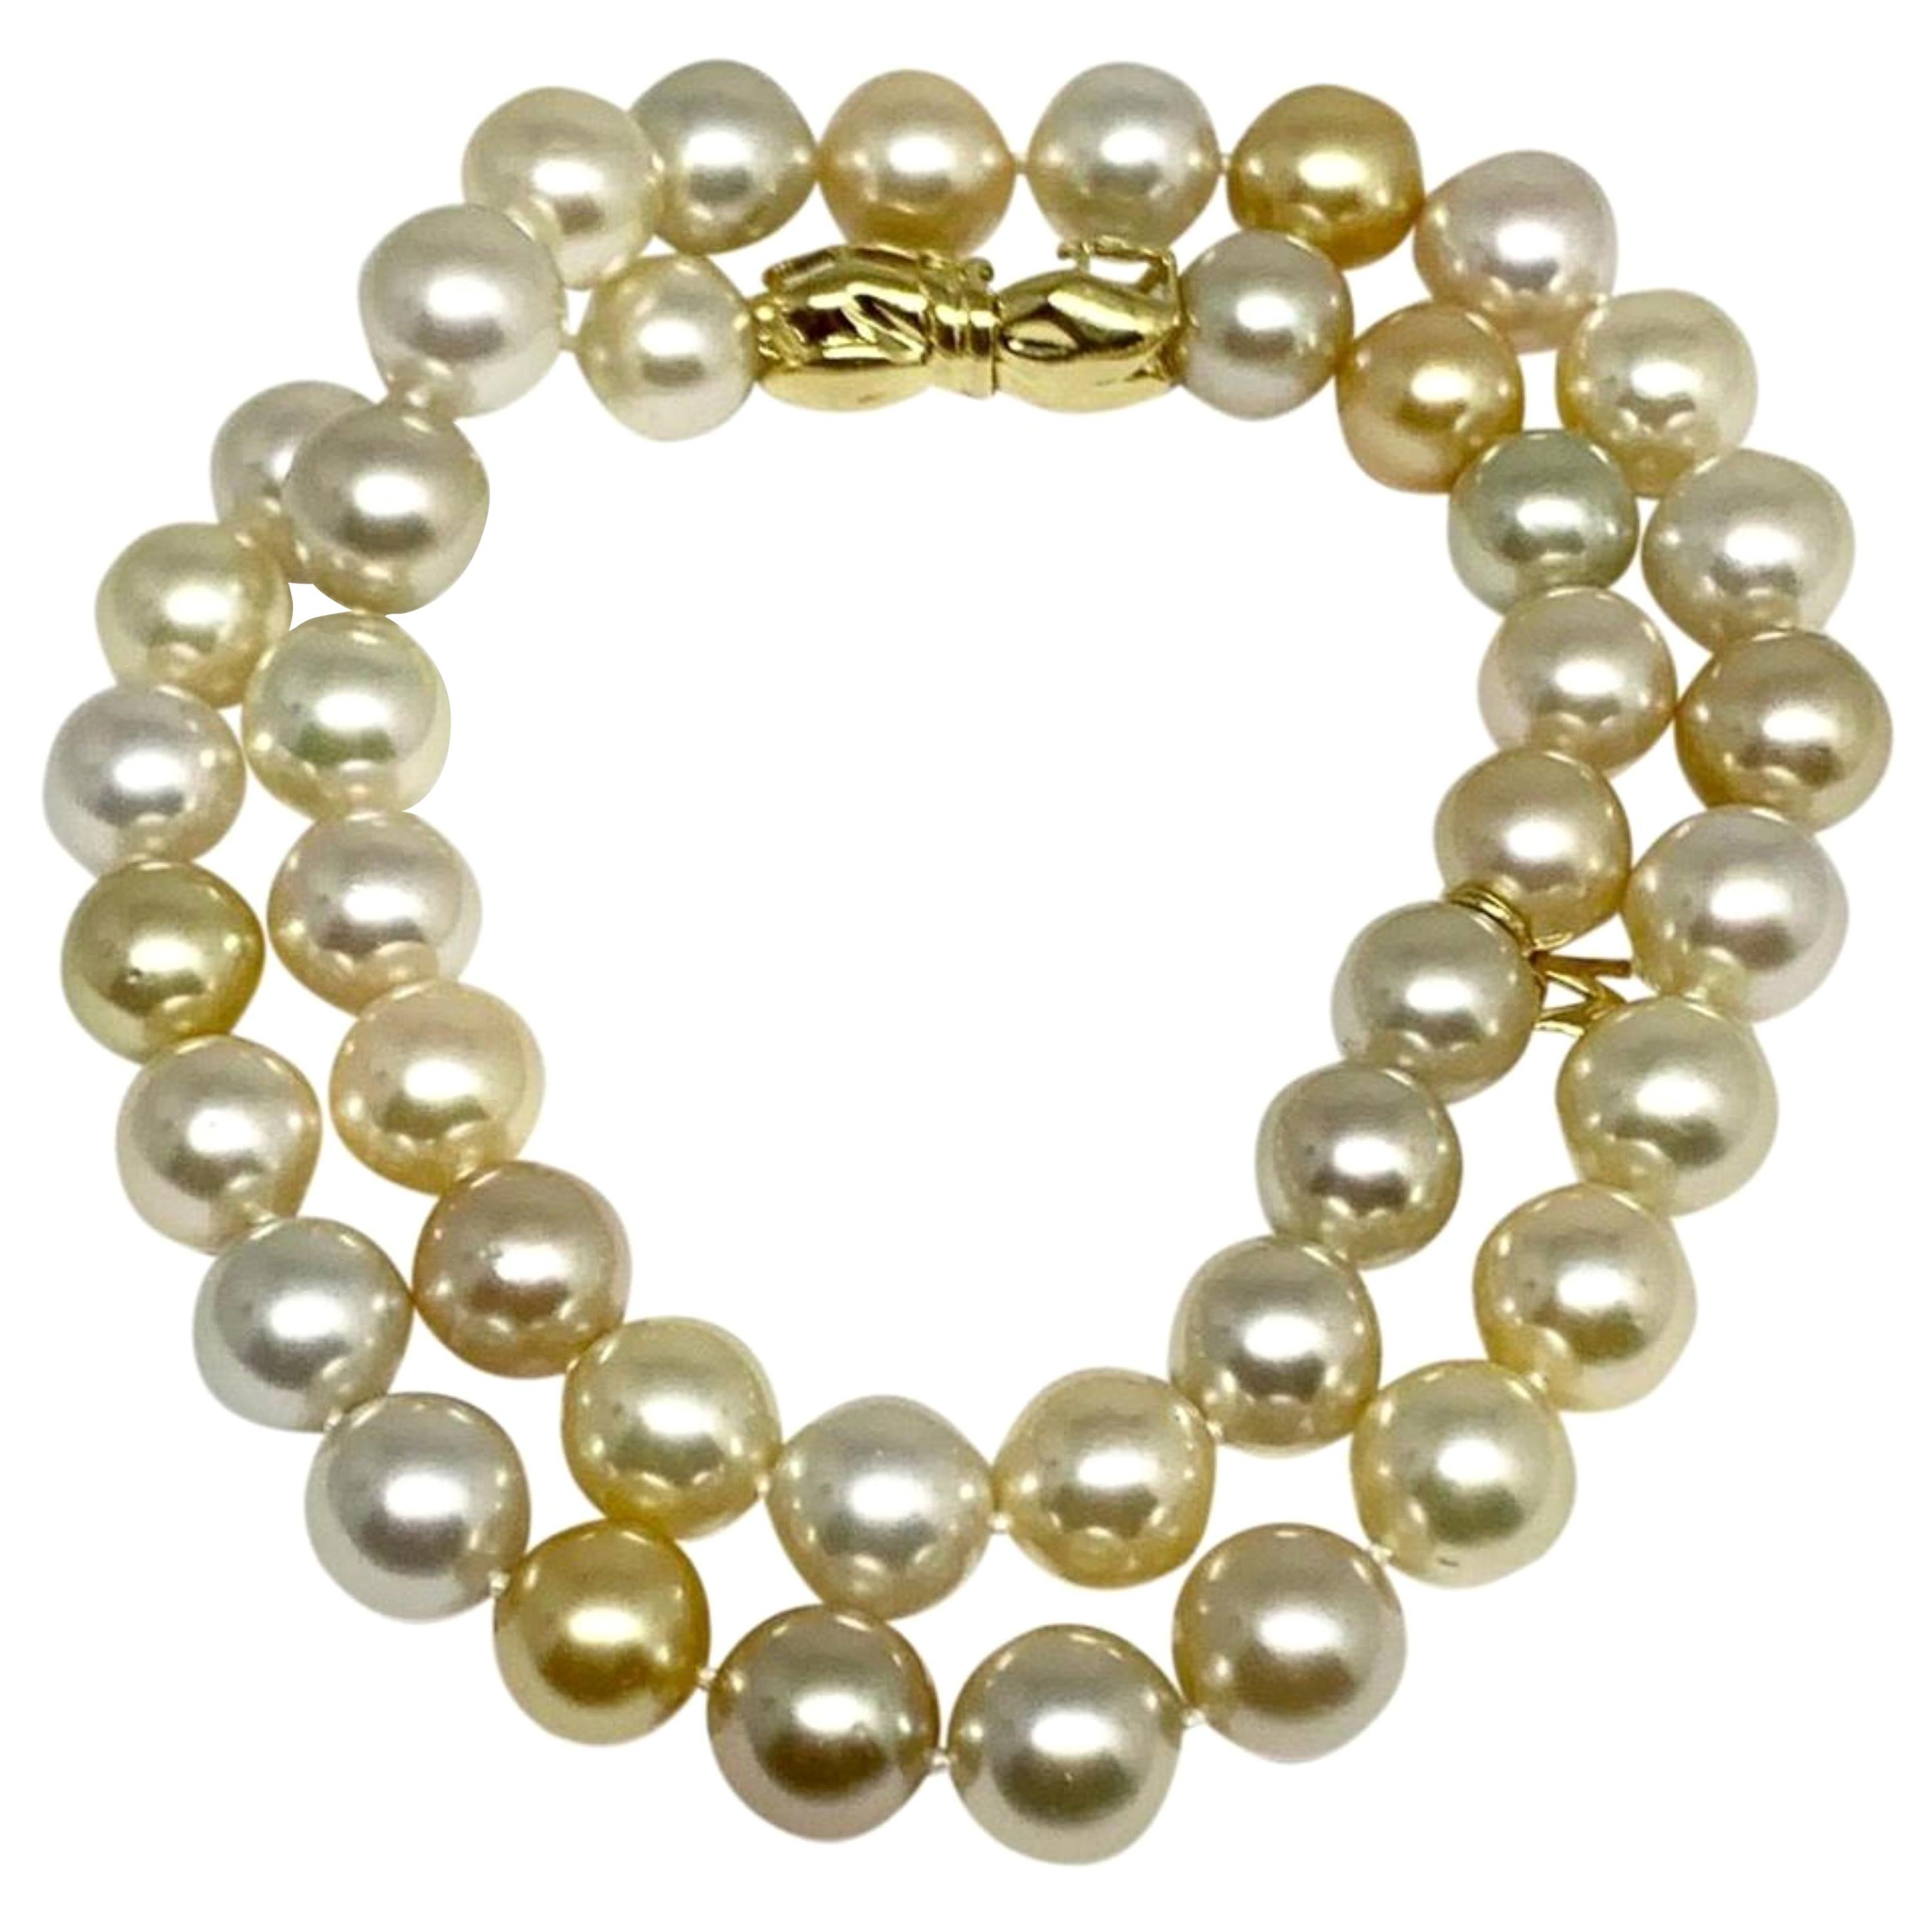 Certified Mikimoto Estate South Sea Pearl Necklace